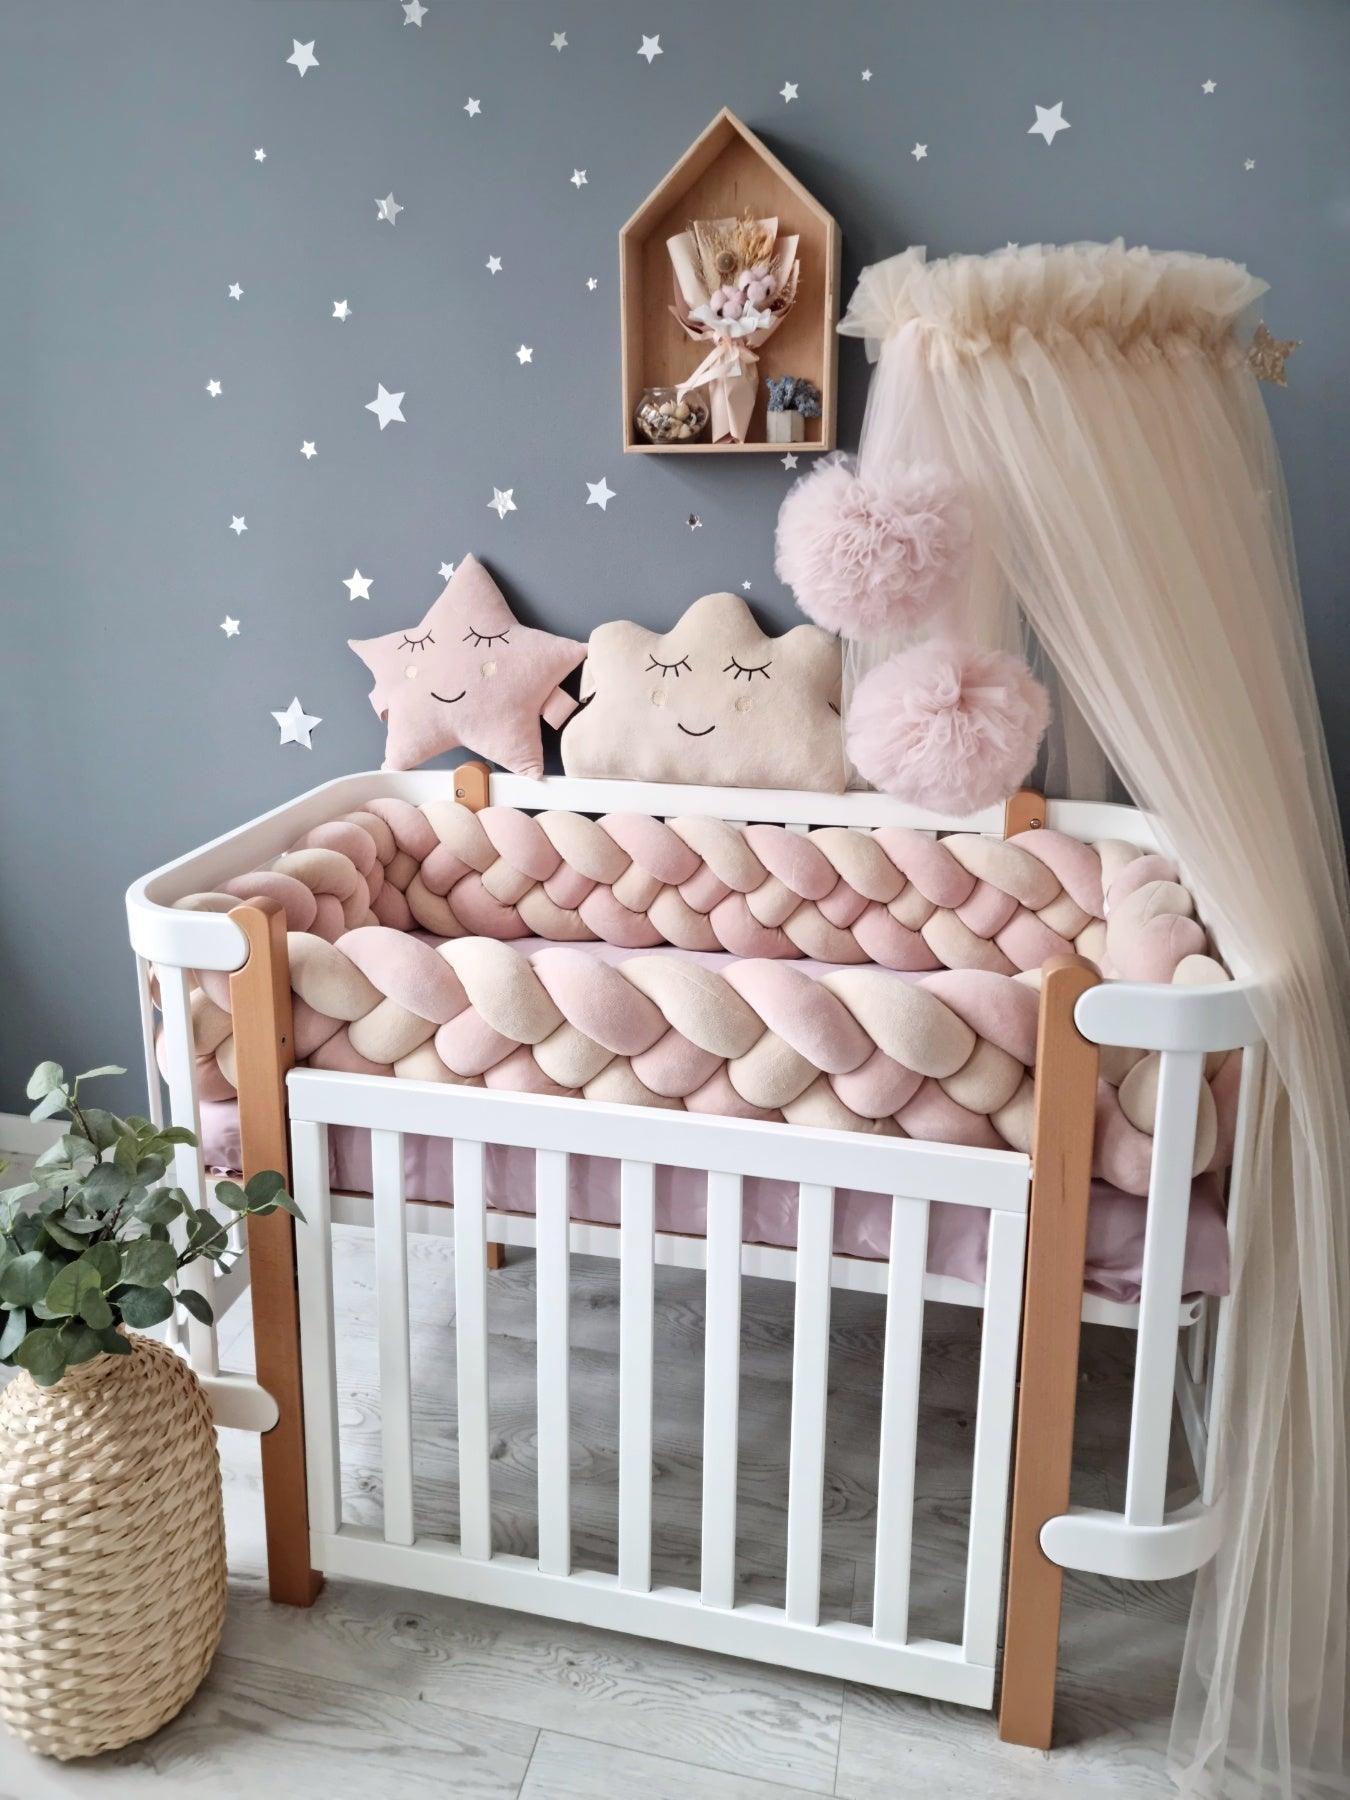 Personalized baby bedding set pistachio and beige. Braided crib bumper - KariStudio